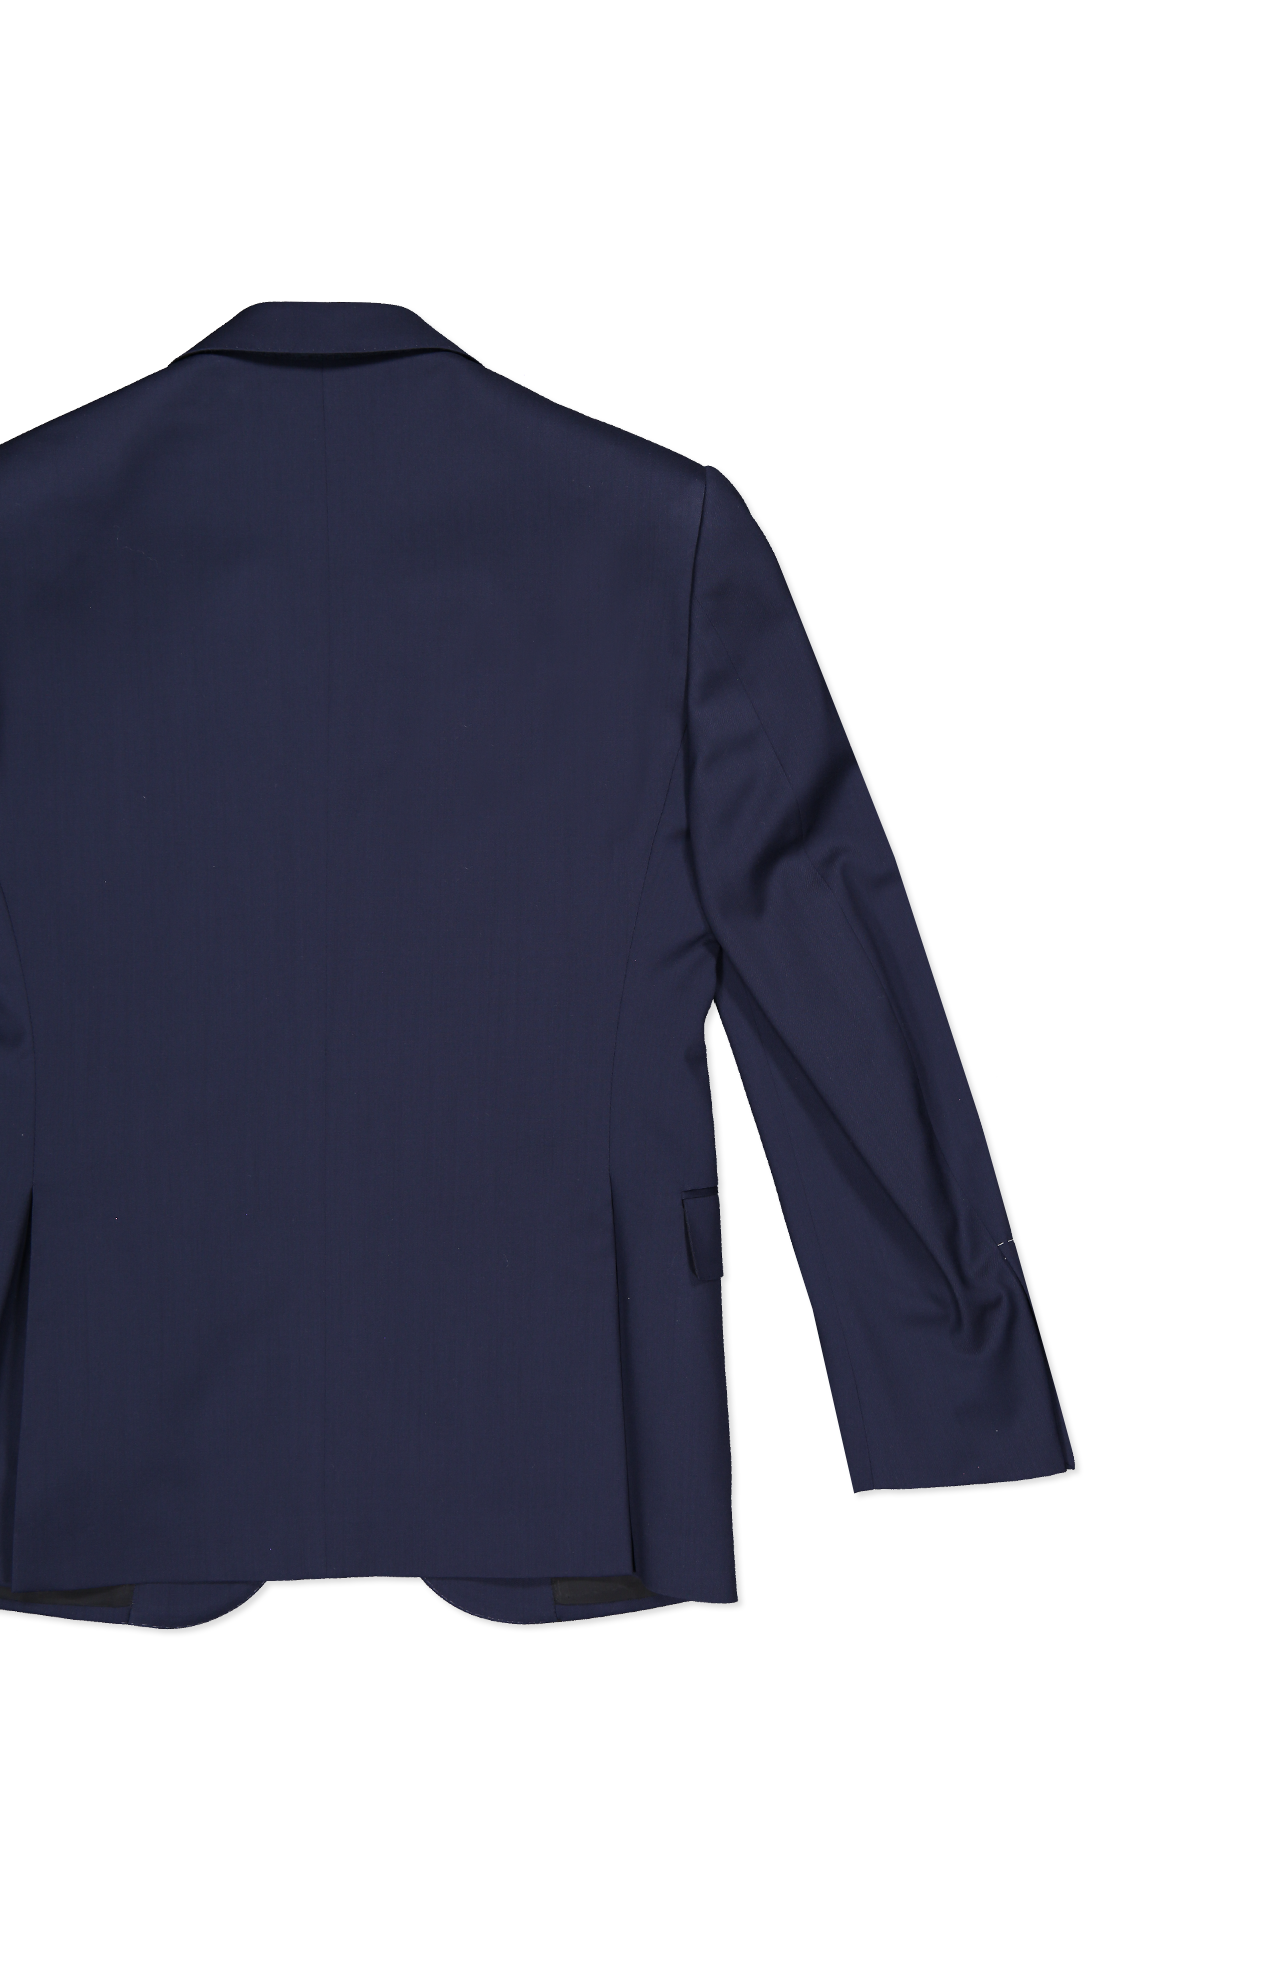 Ralph Lauren Purple Label Wool Serge 2B Gregory Jacket Classic Navy Back Flat Image (6834394857587)